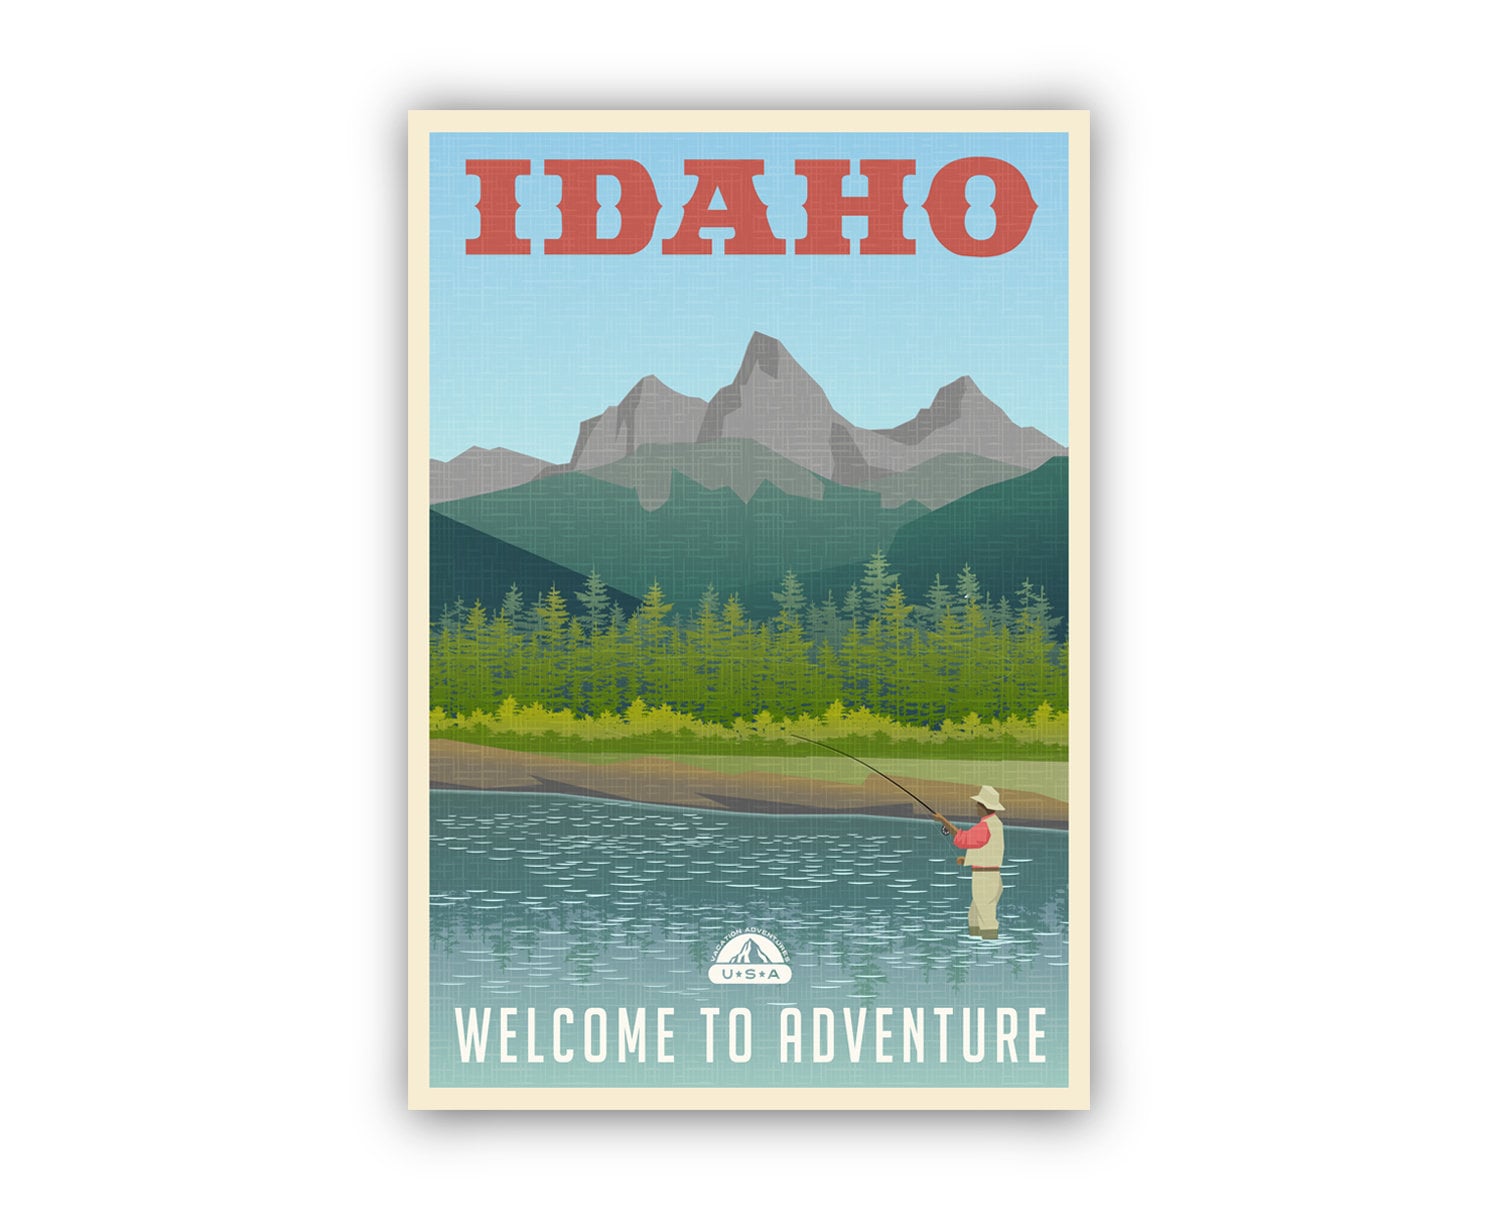 Idaho Vintage Rustic Poster Print, Retro Style Travel Poster